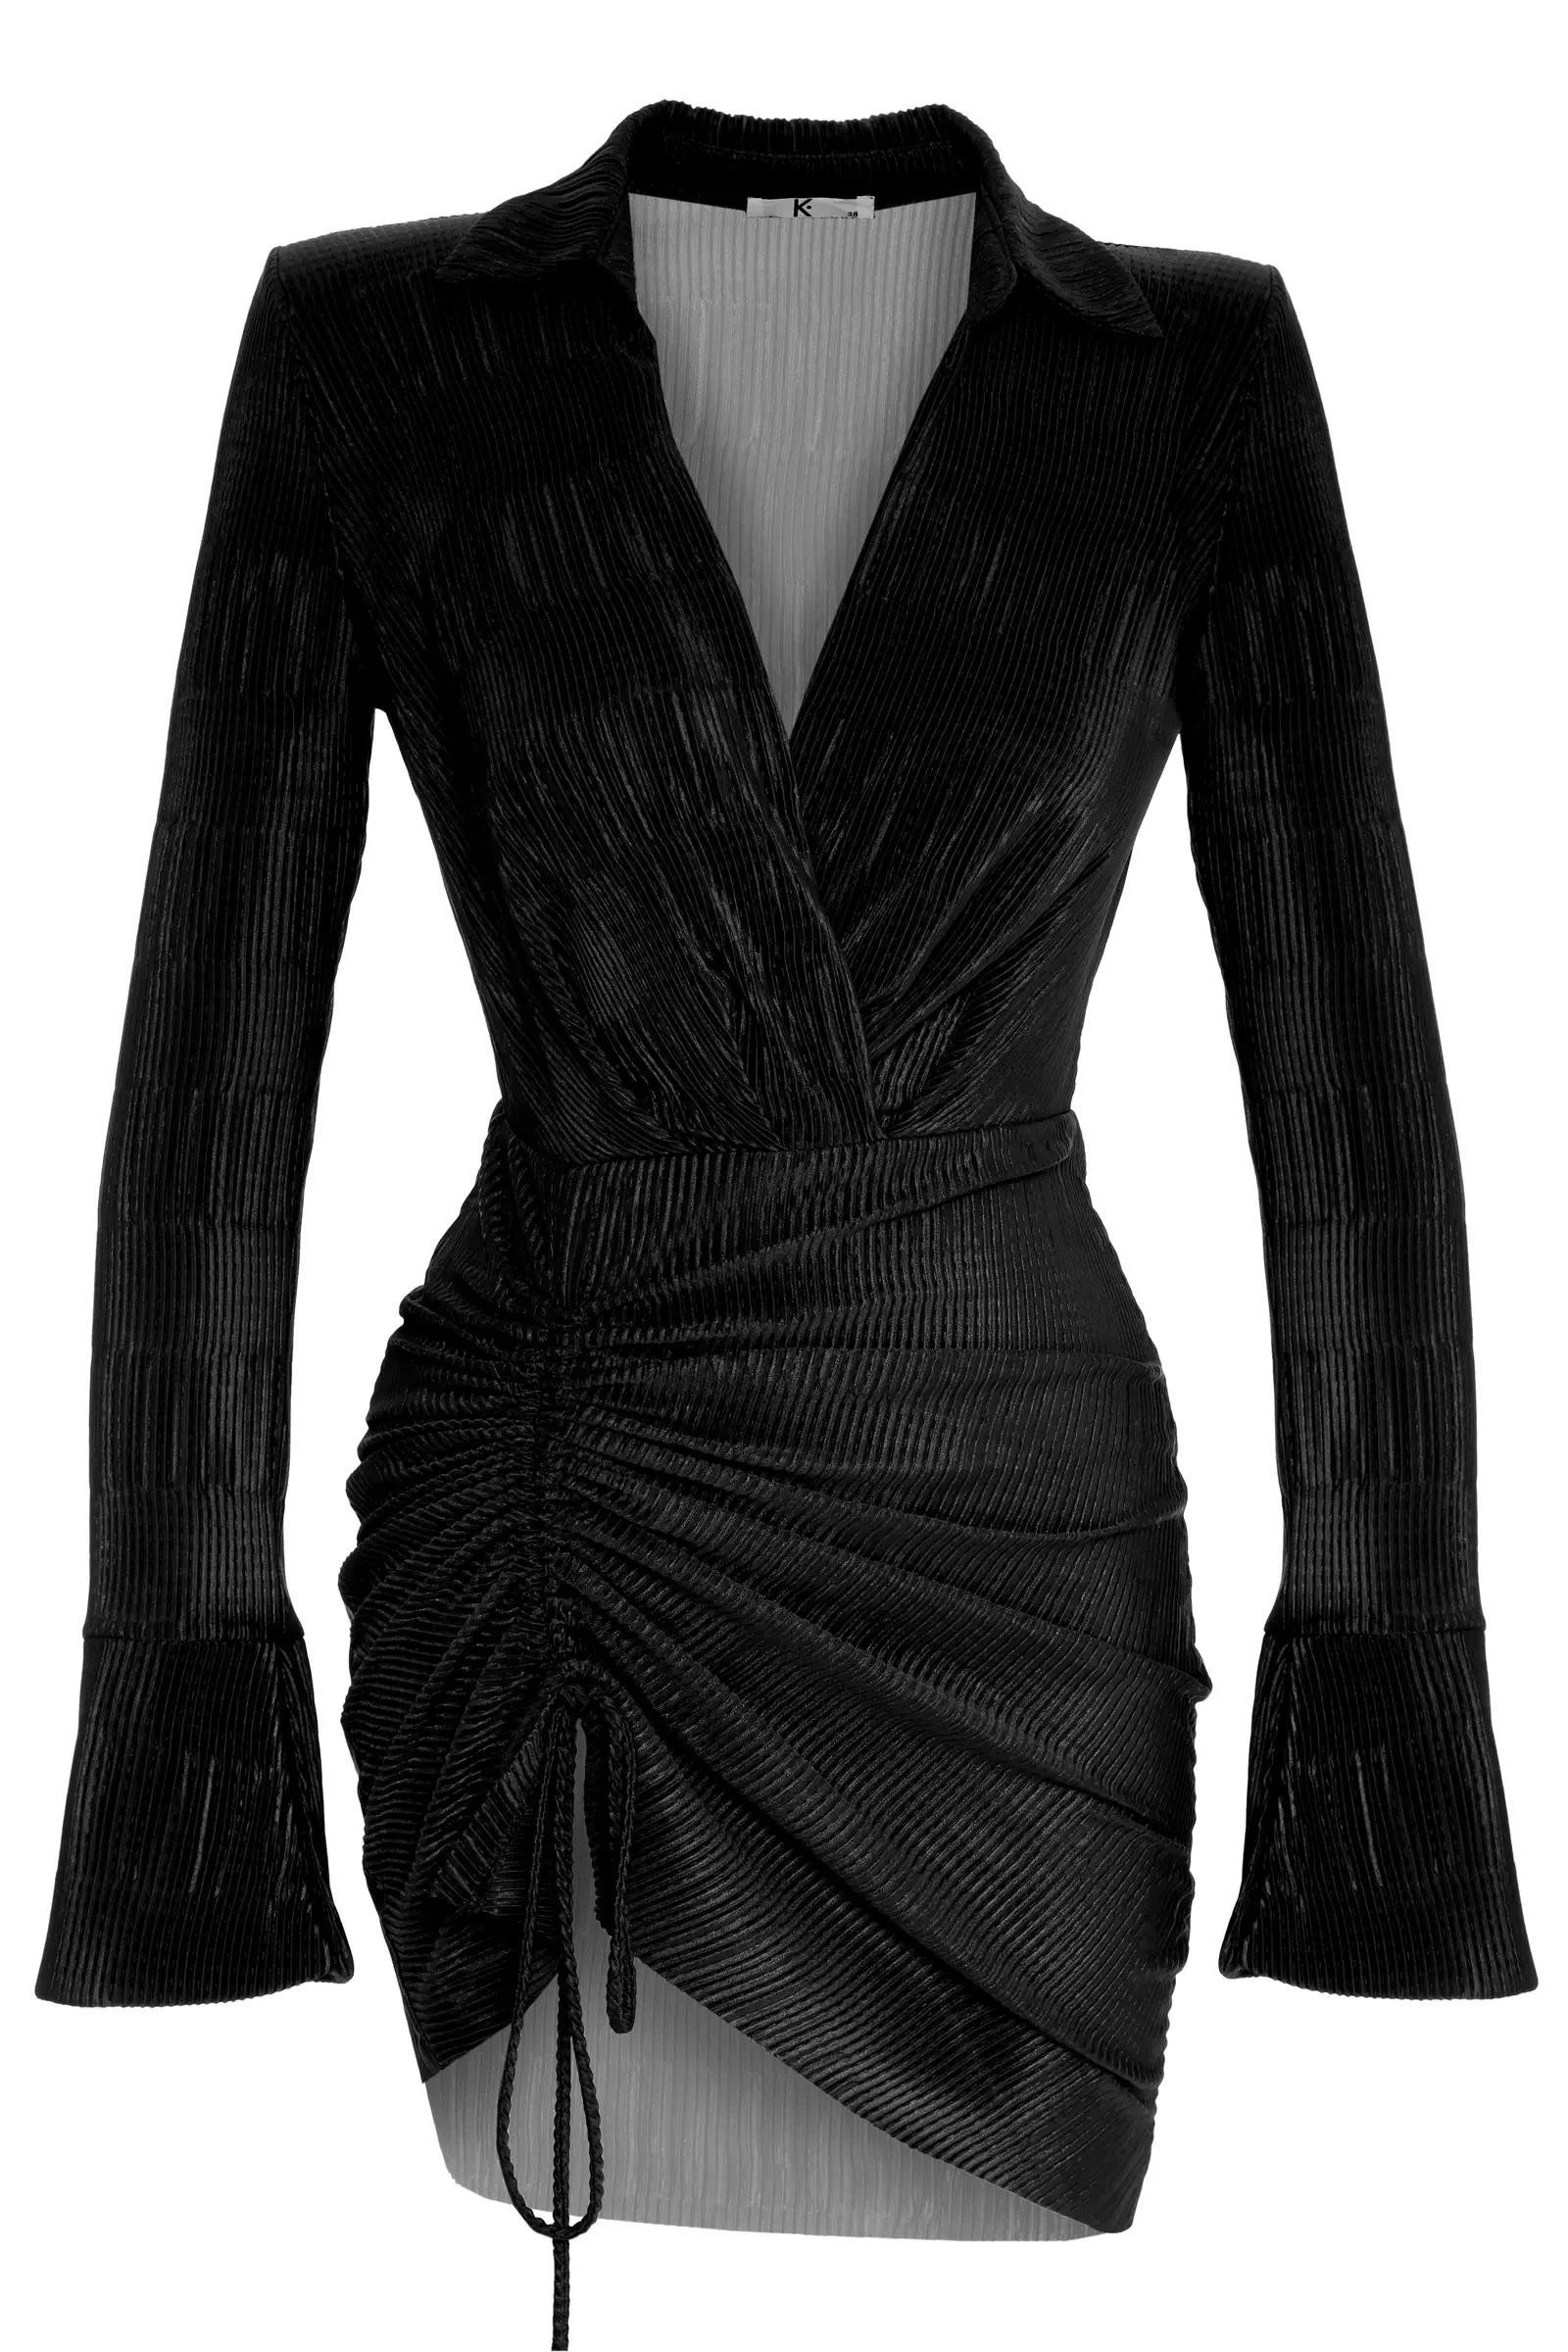 Black sendy long sleeve midi dress